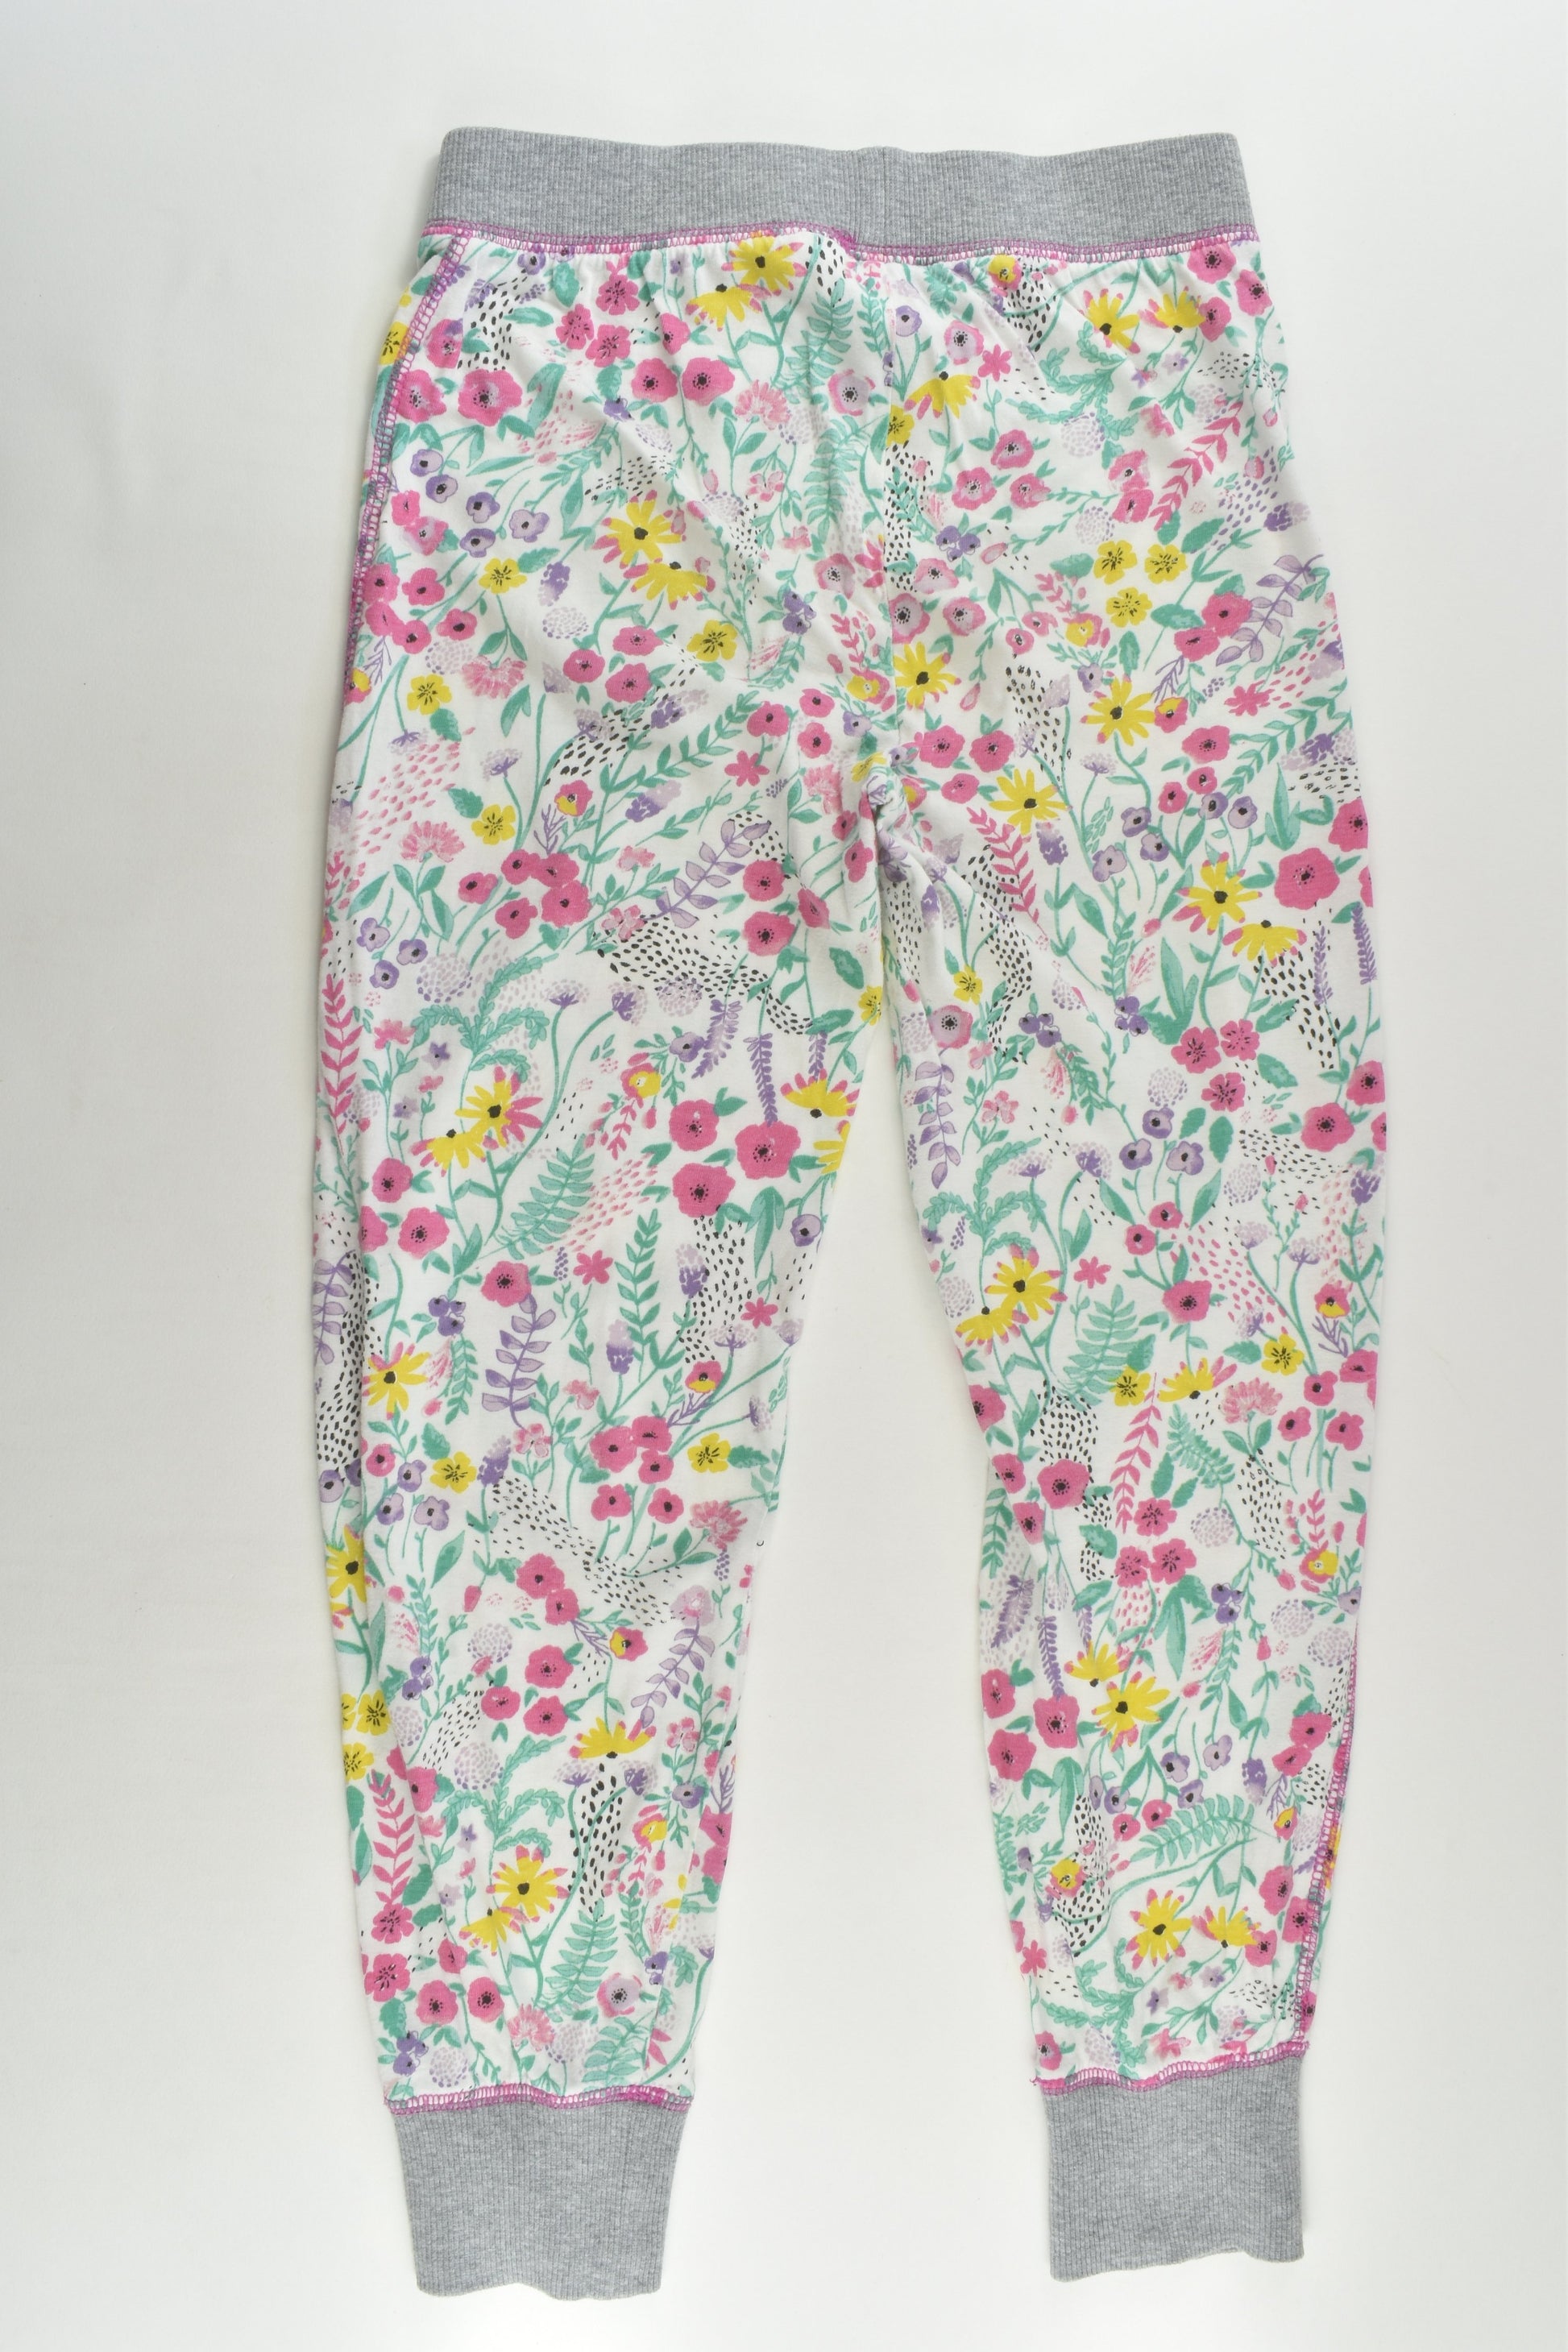 Sussan Size 6-7 'You Belong Among The Wildflowers' Pyjamas